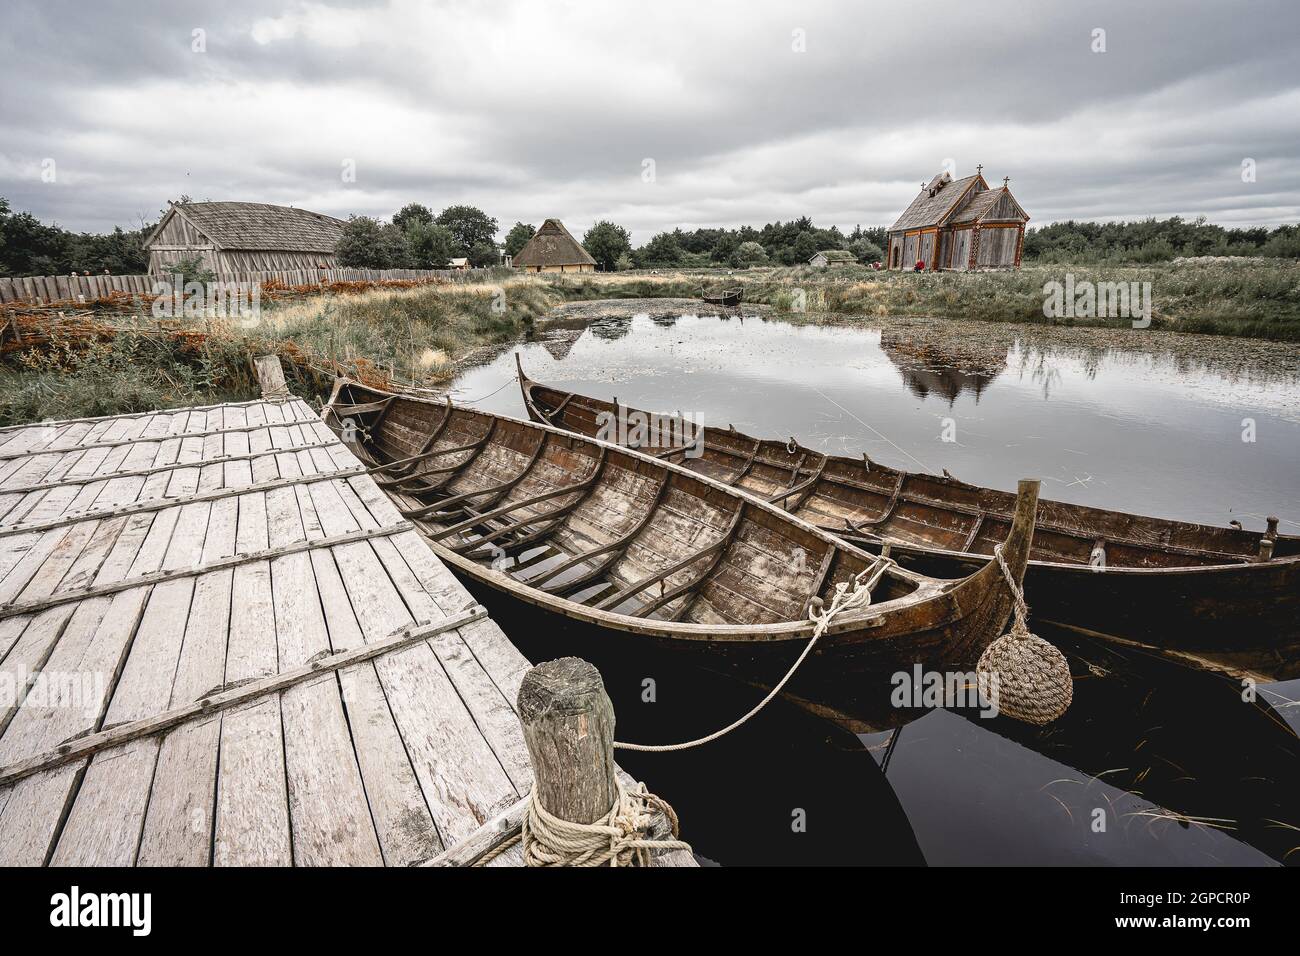 viking boats in the little viking center in Ribe Denmark. Stock Photo